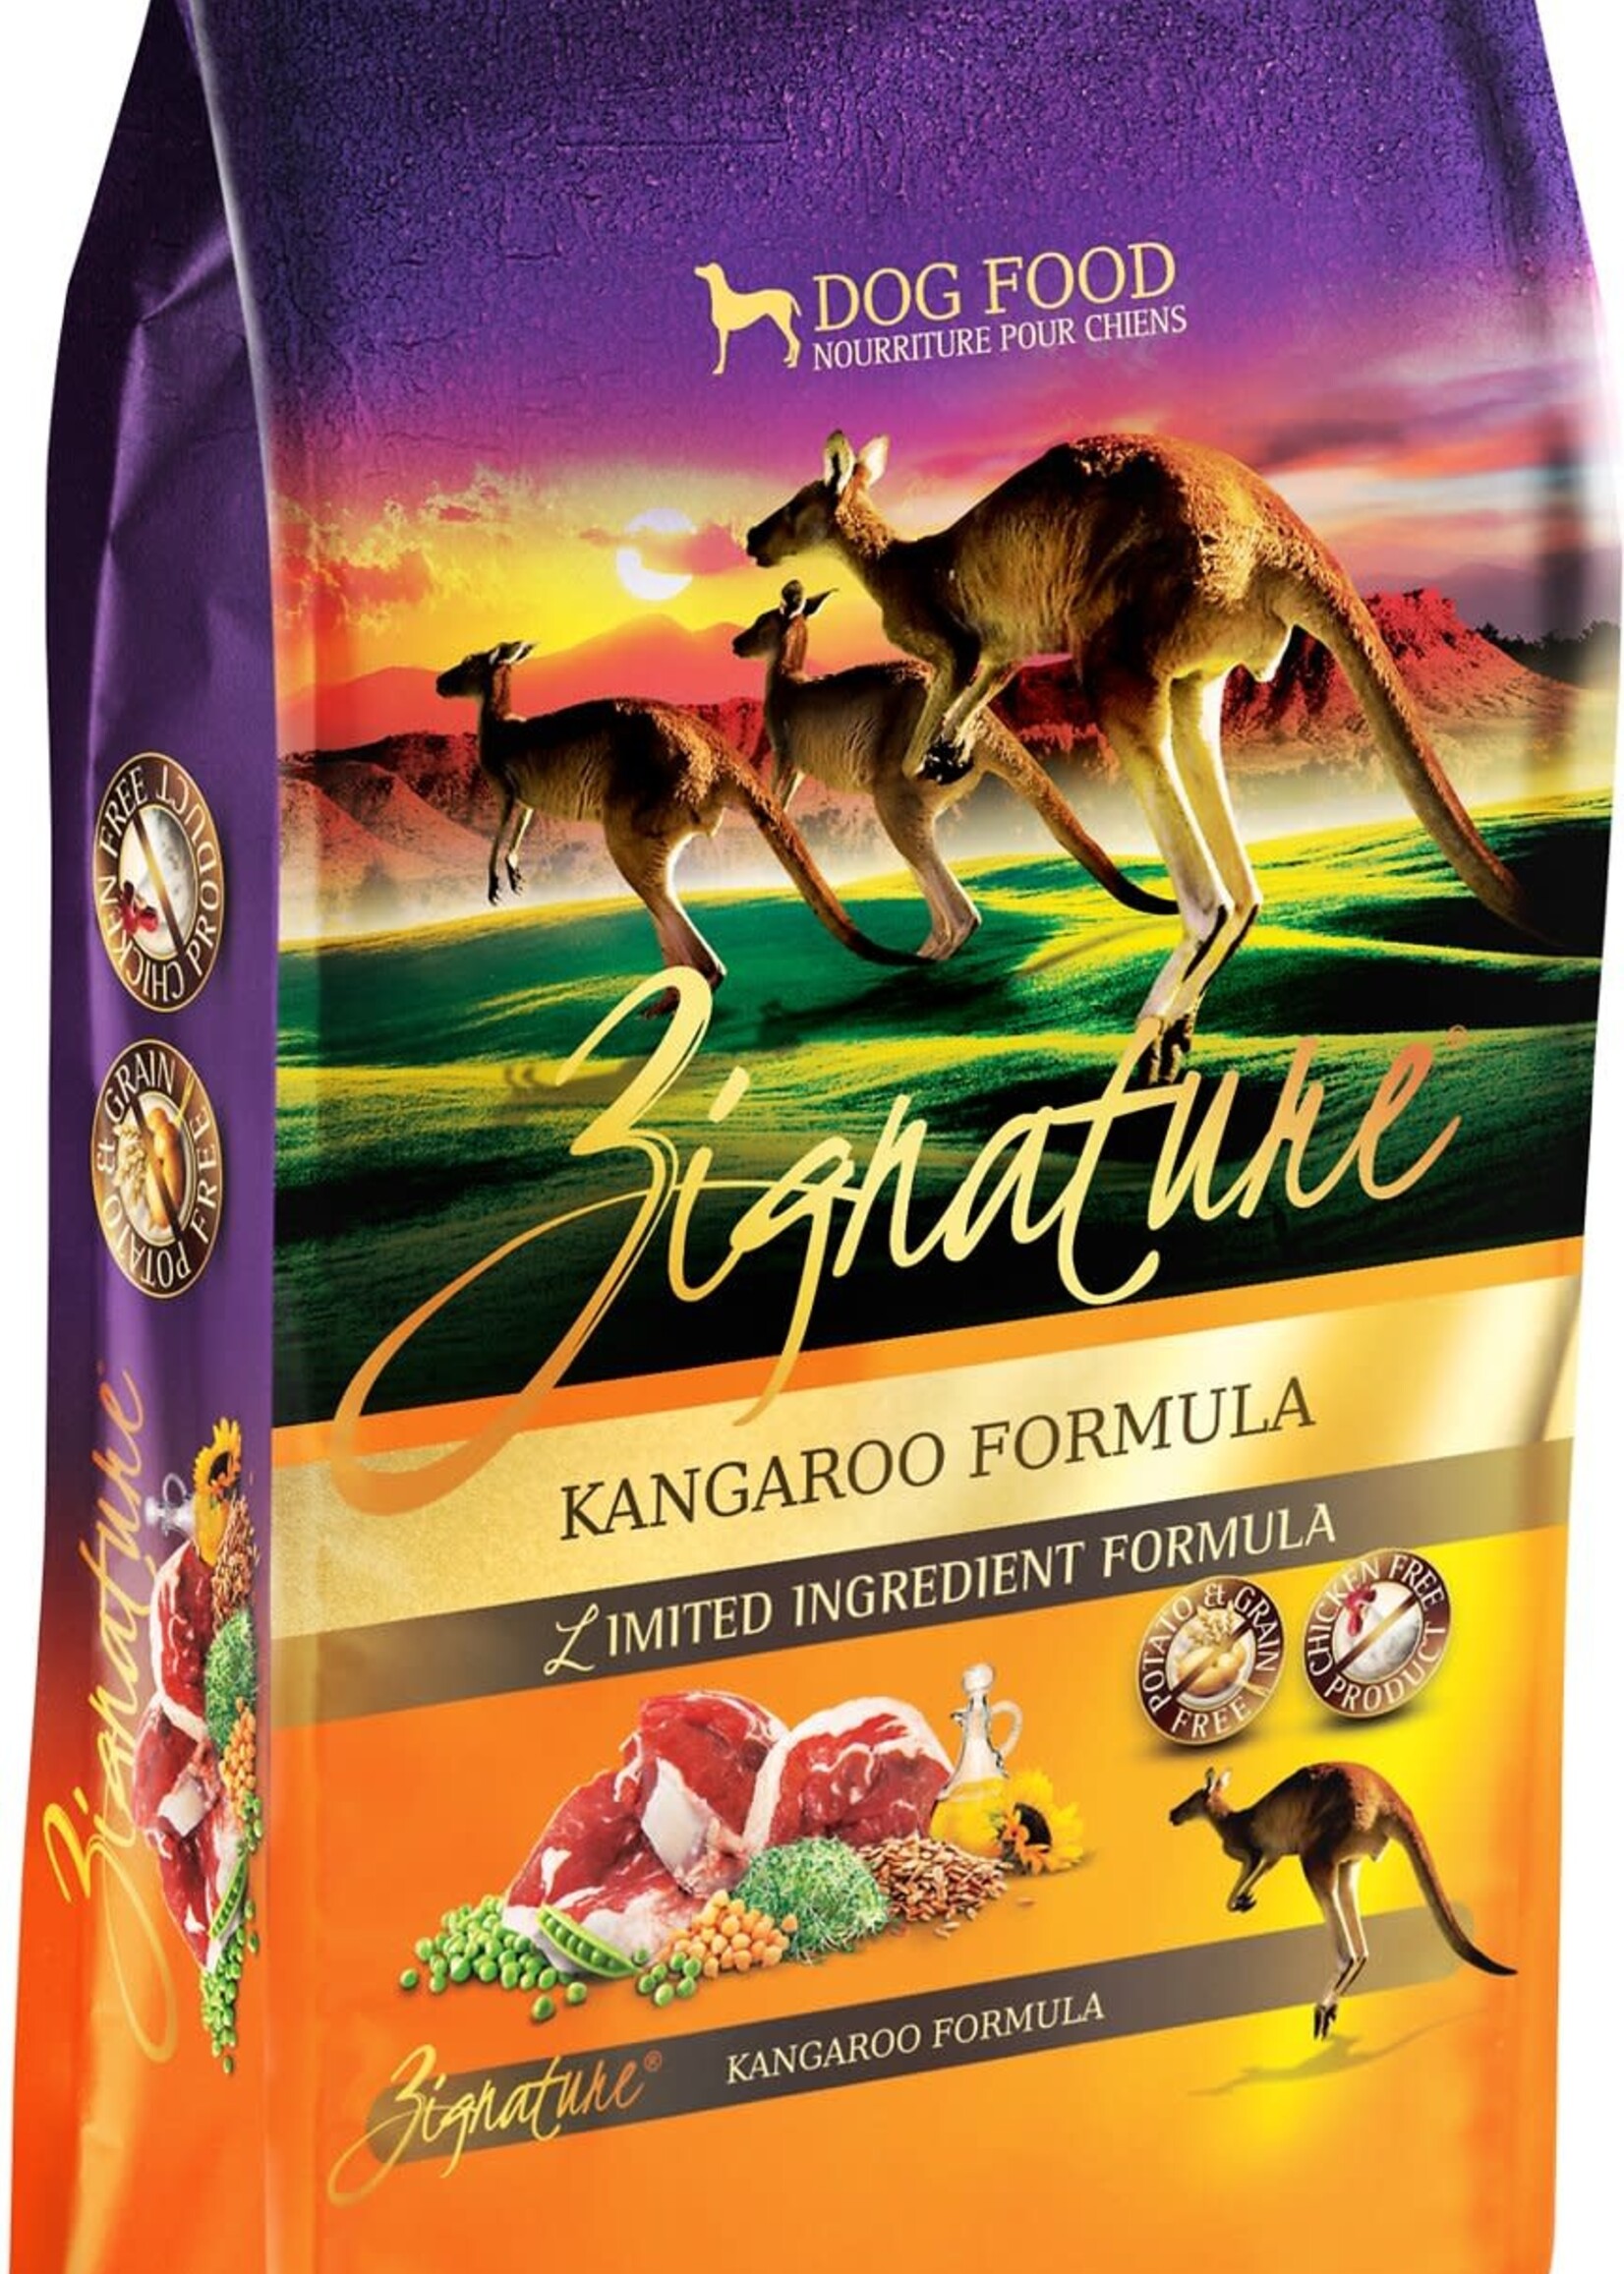 Zignature Zignature Limited Ingredient Kangaroo Formula Dry Dog Food